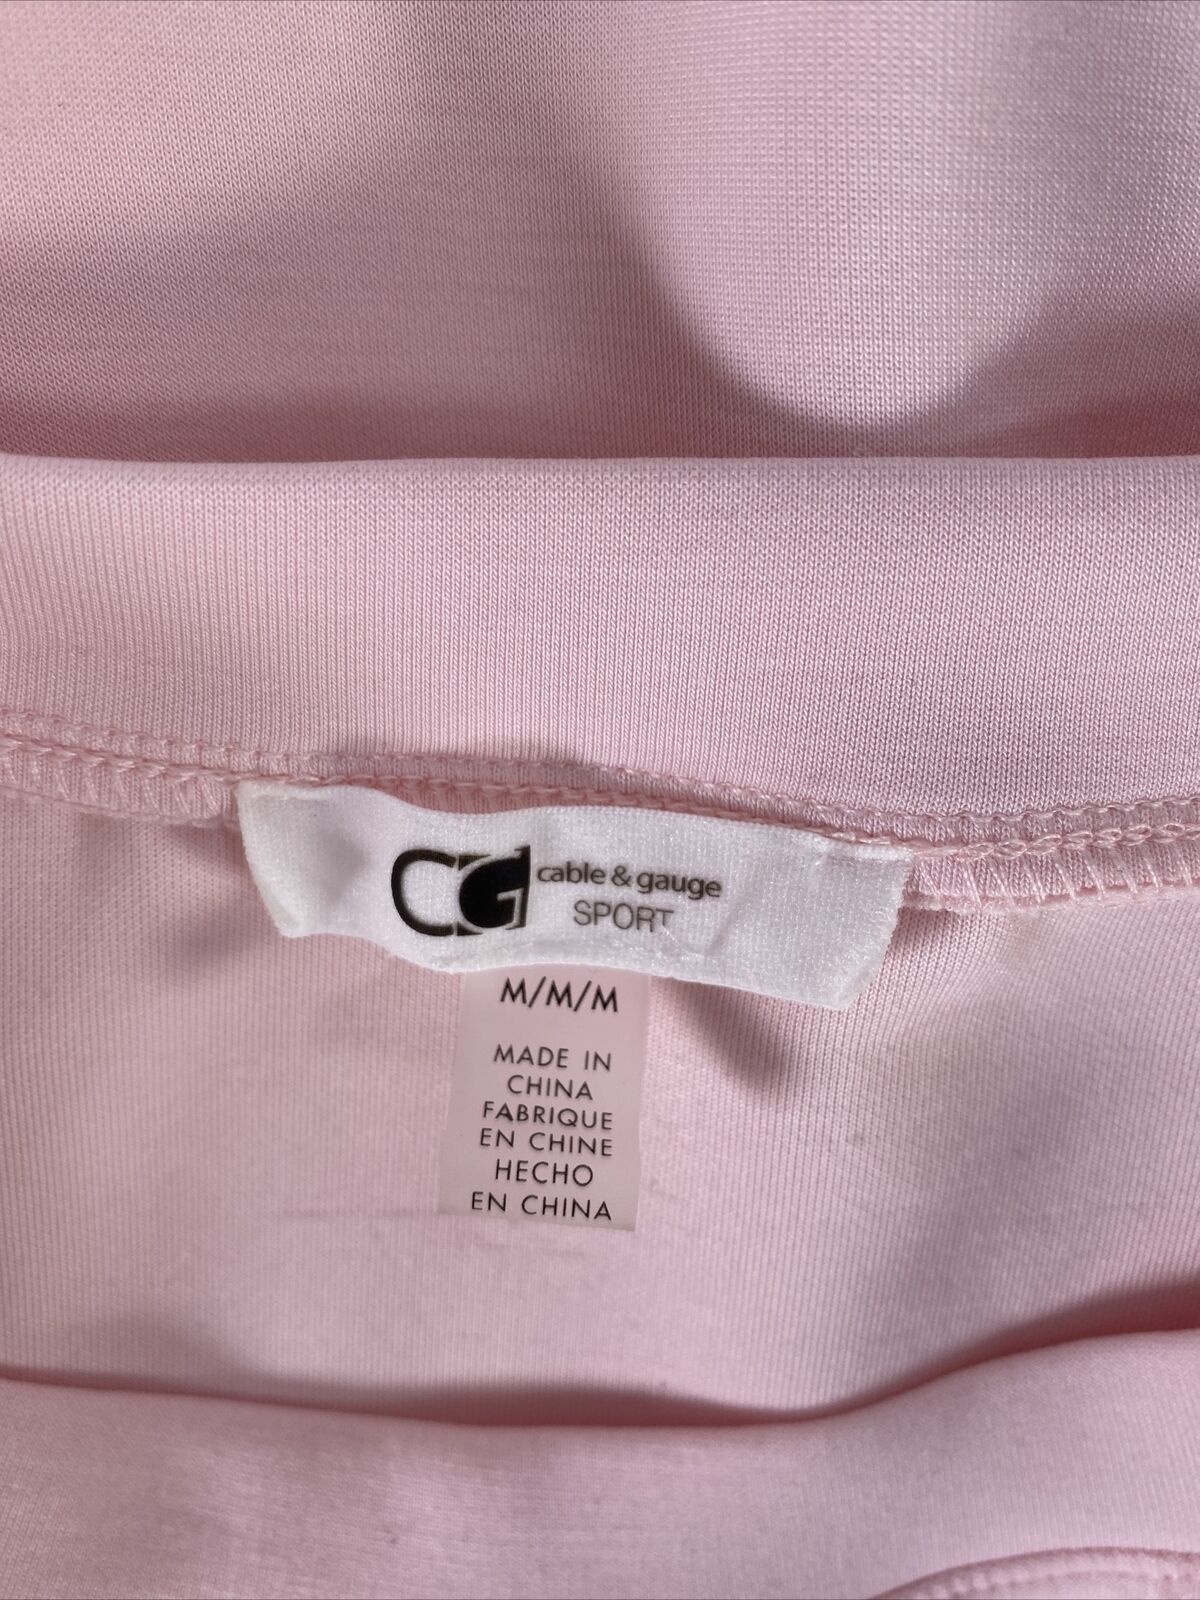 Cable & Gauge Sport Women's Pink Long Sleeve Crewneck Sweatshirt - M